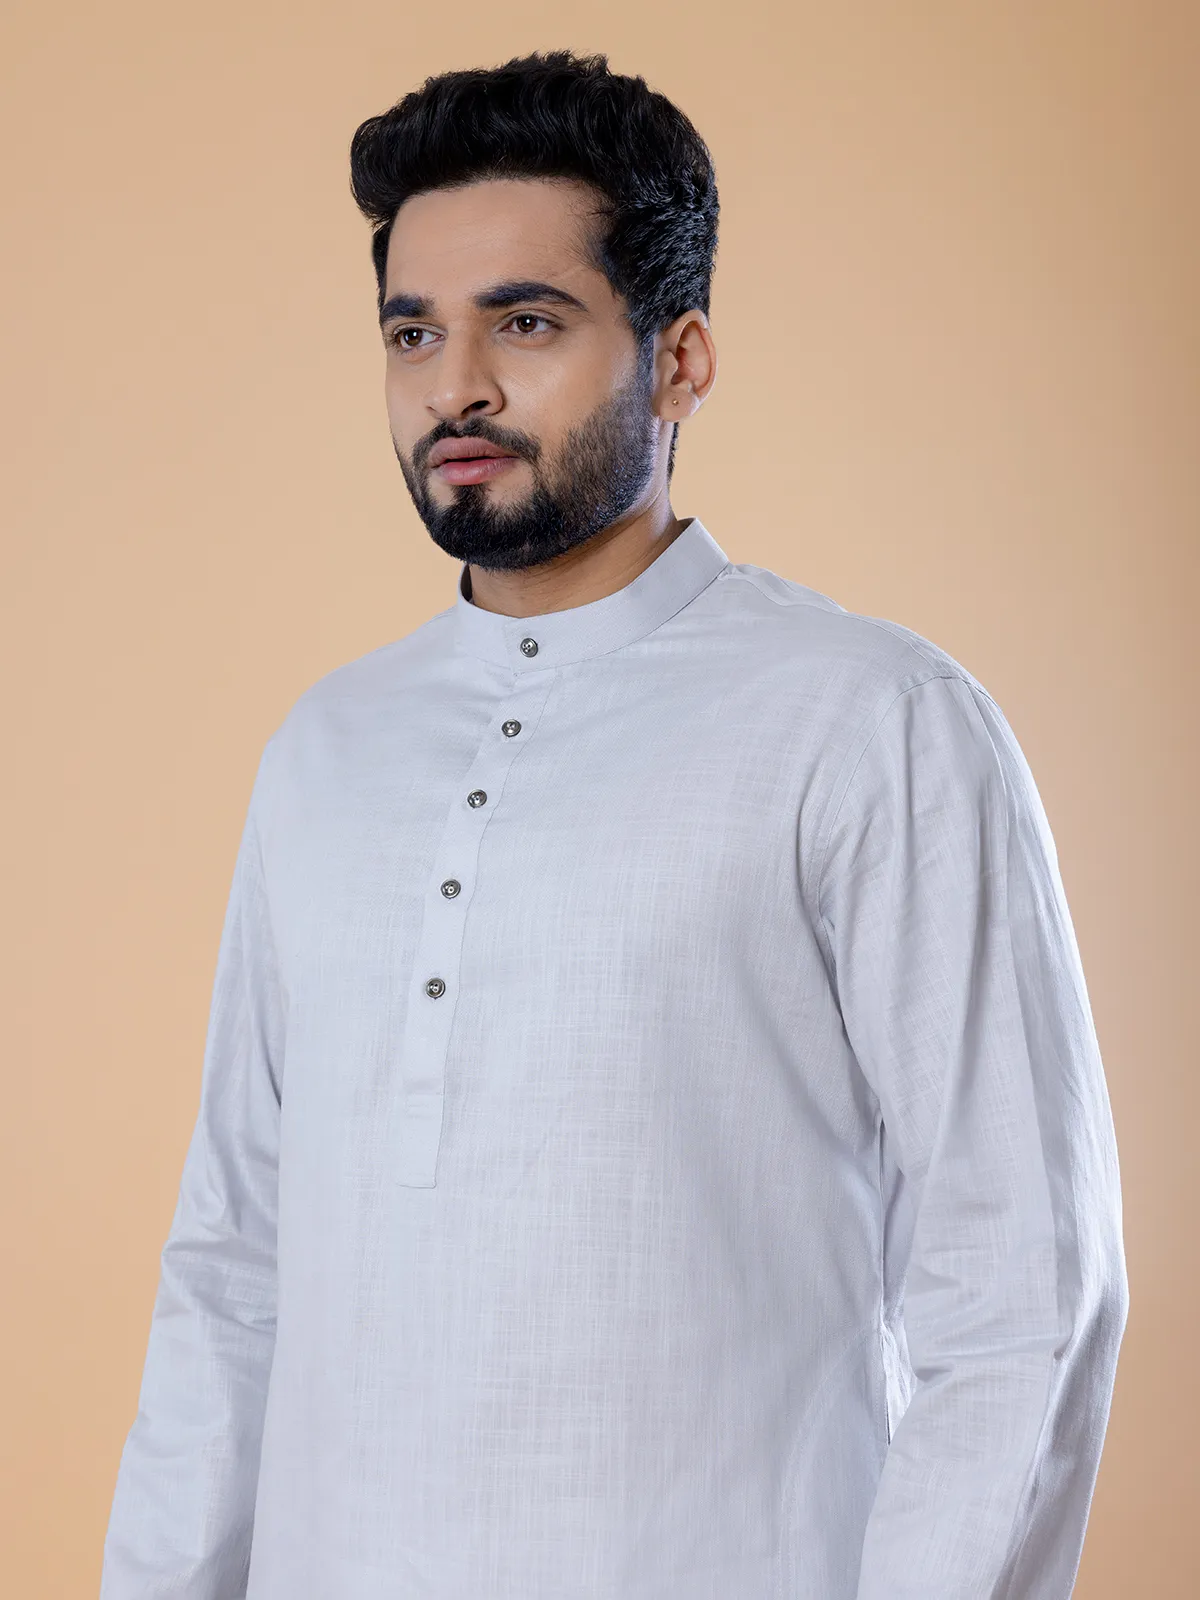 Plain cotton light grey kurta suit